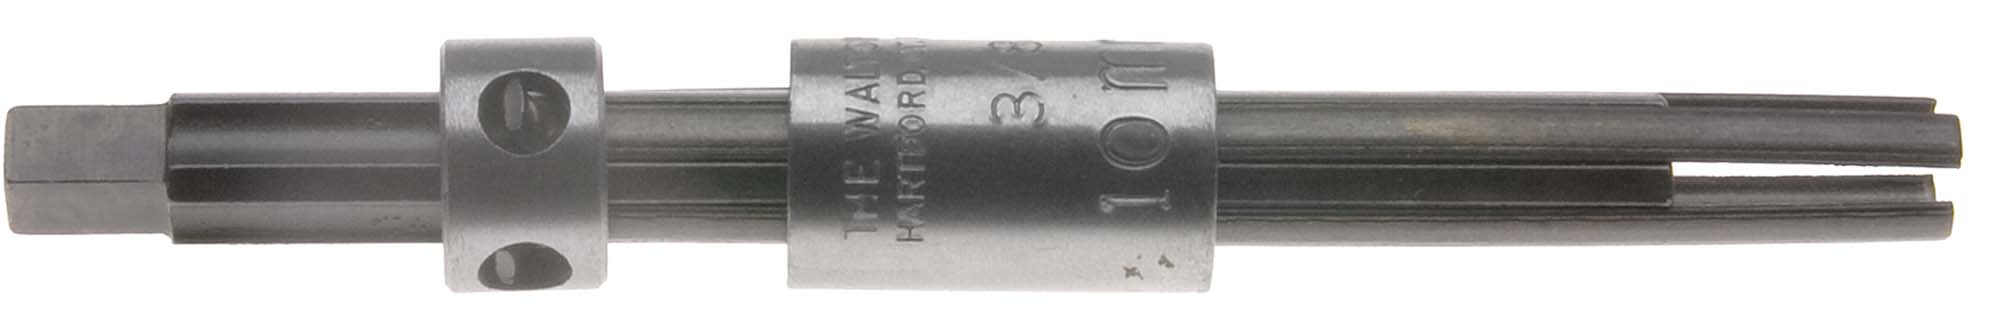 #10 4 Flute Walton Tap Extractor